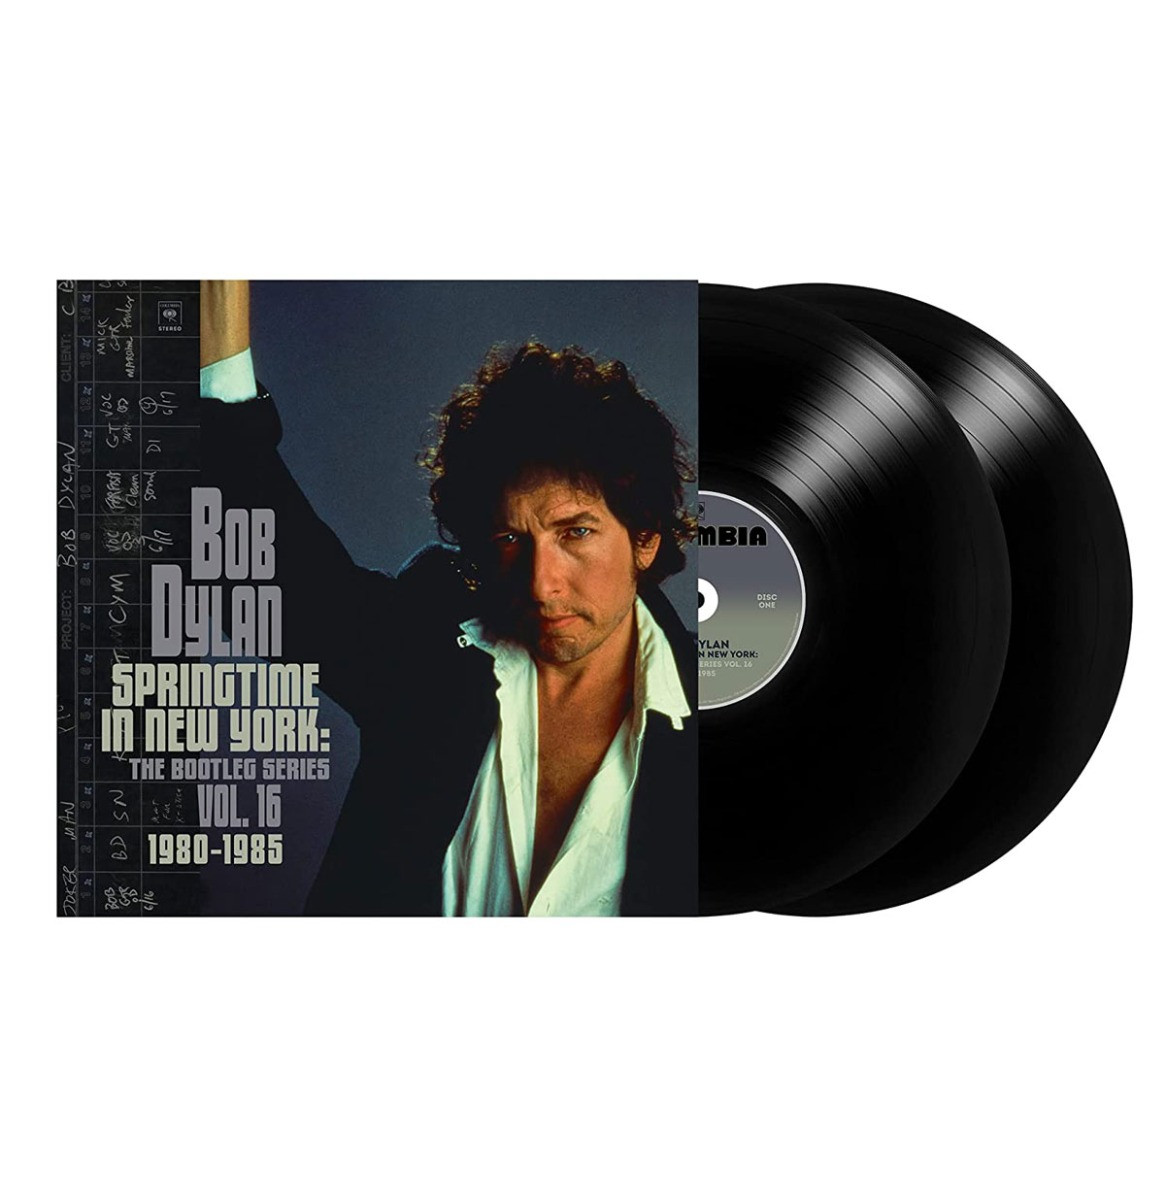 Bob Dylan - Springtime In New York: The Bootleg Series Vol. 16 1980-1985 2LP